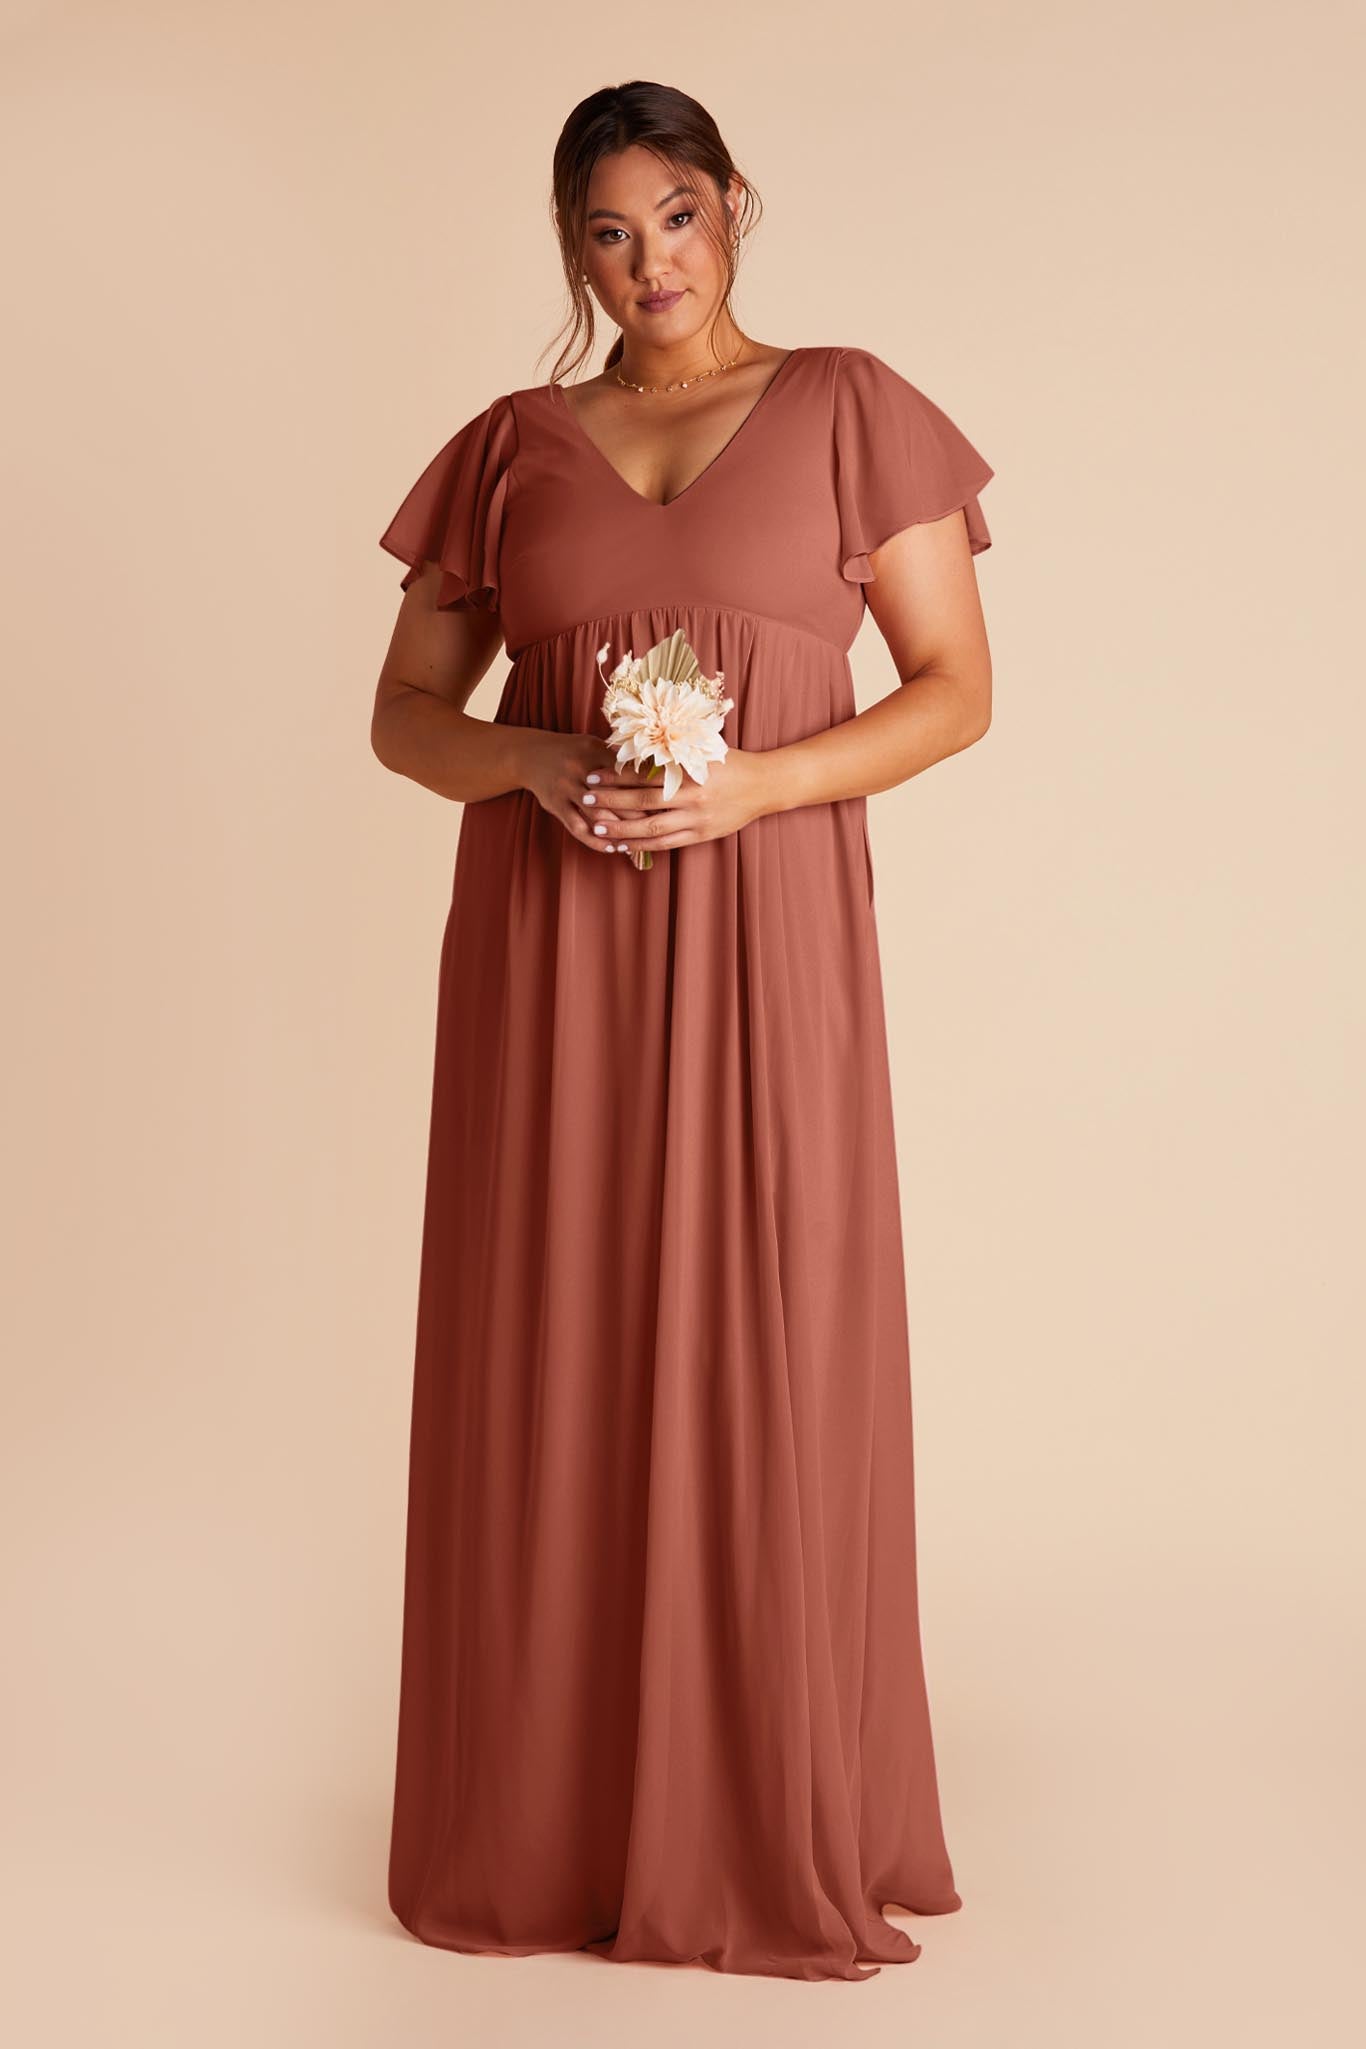 Desert Rose Hannah Empire Dress by Birdy Grey